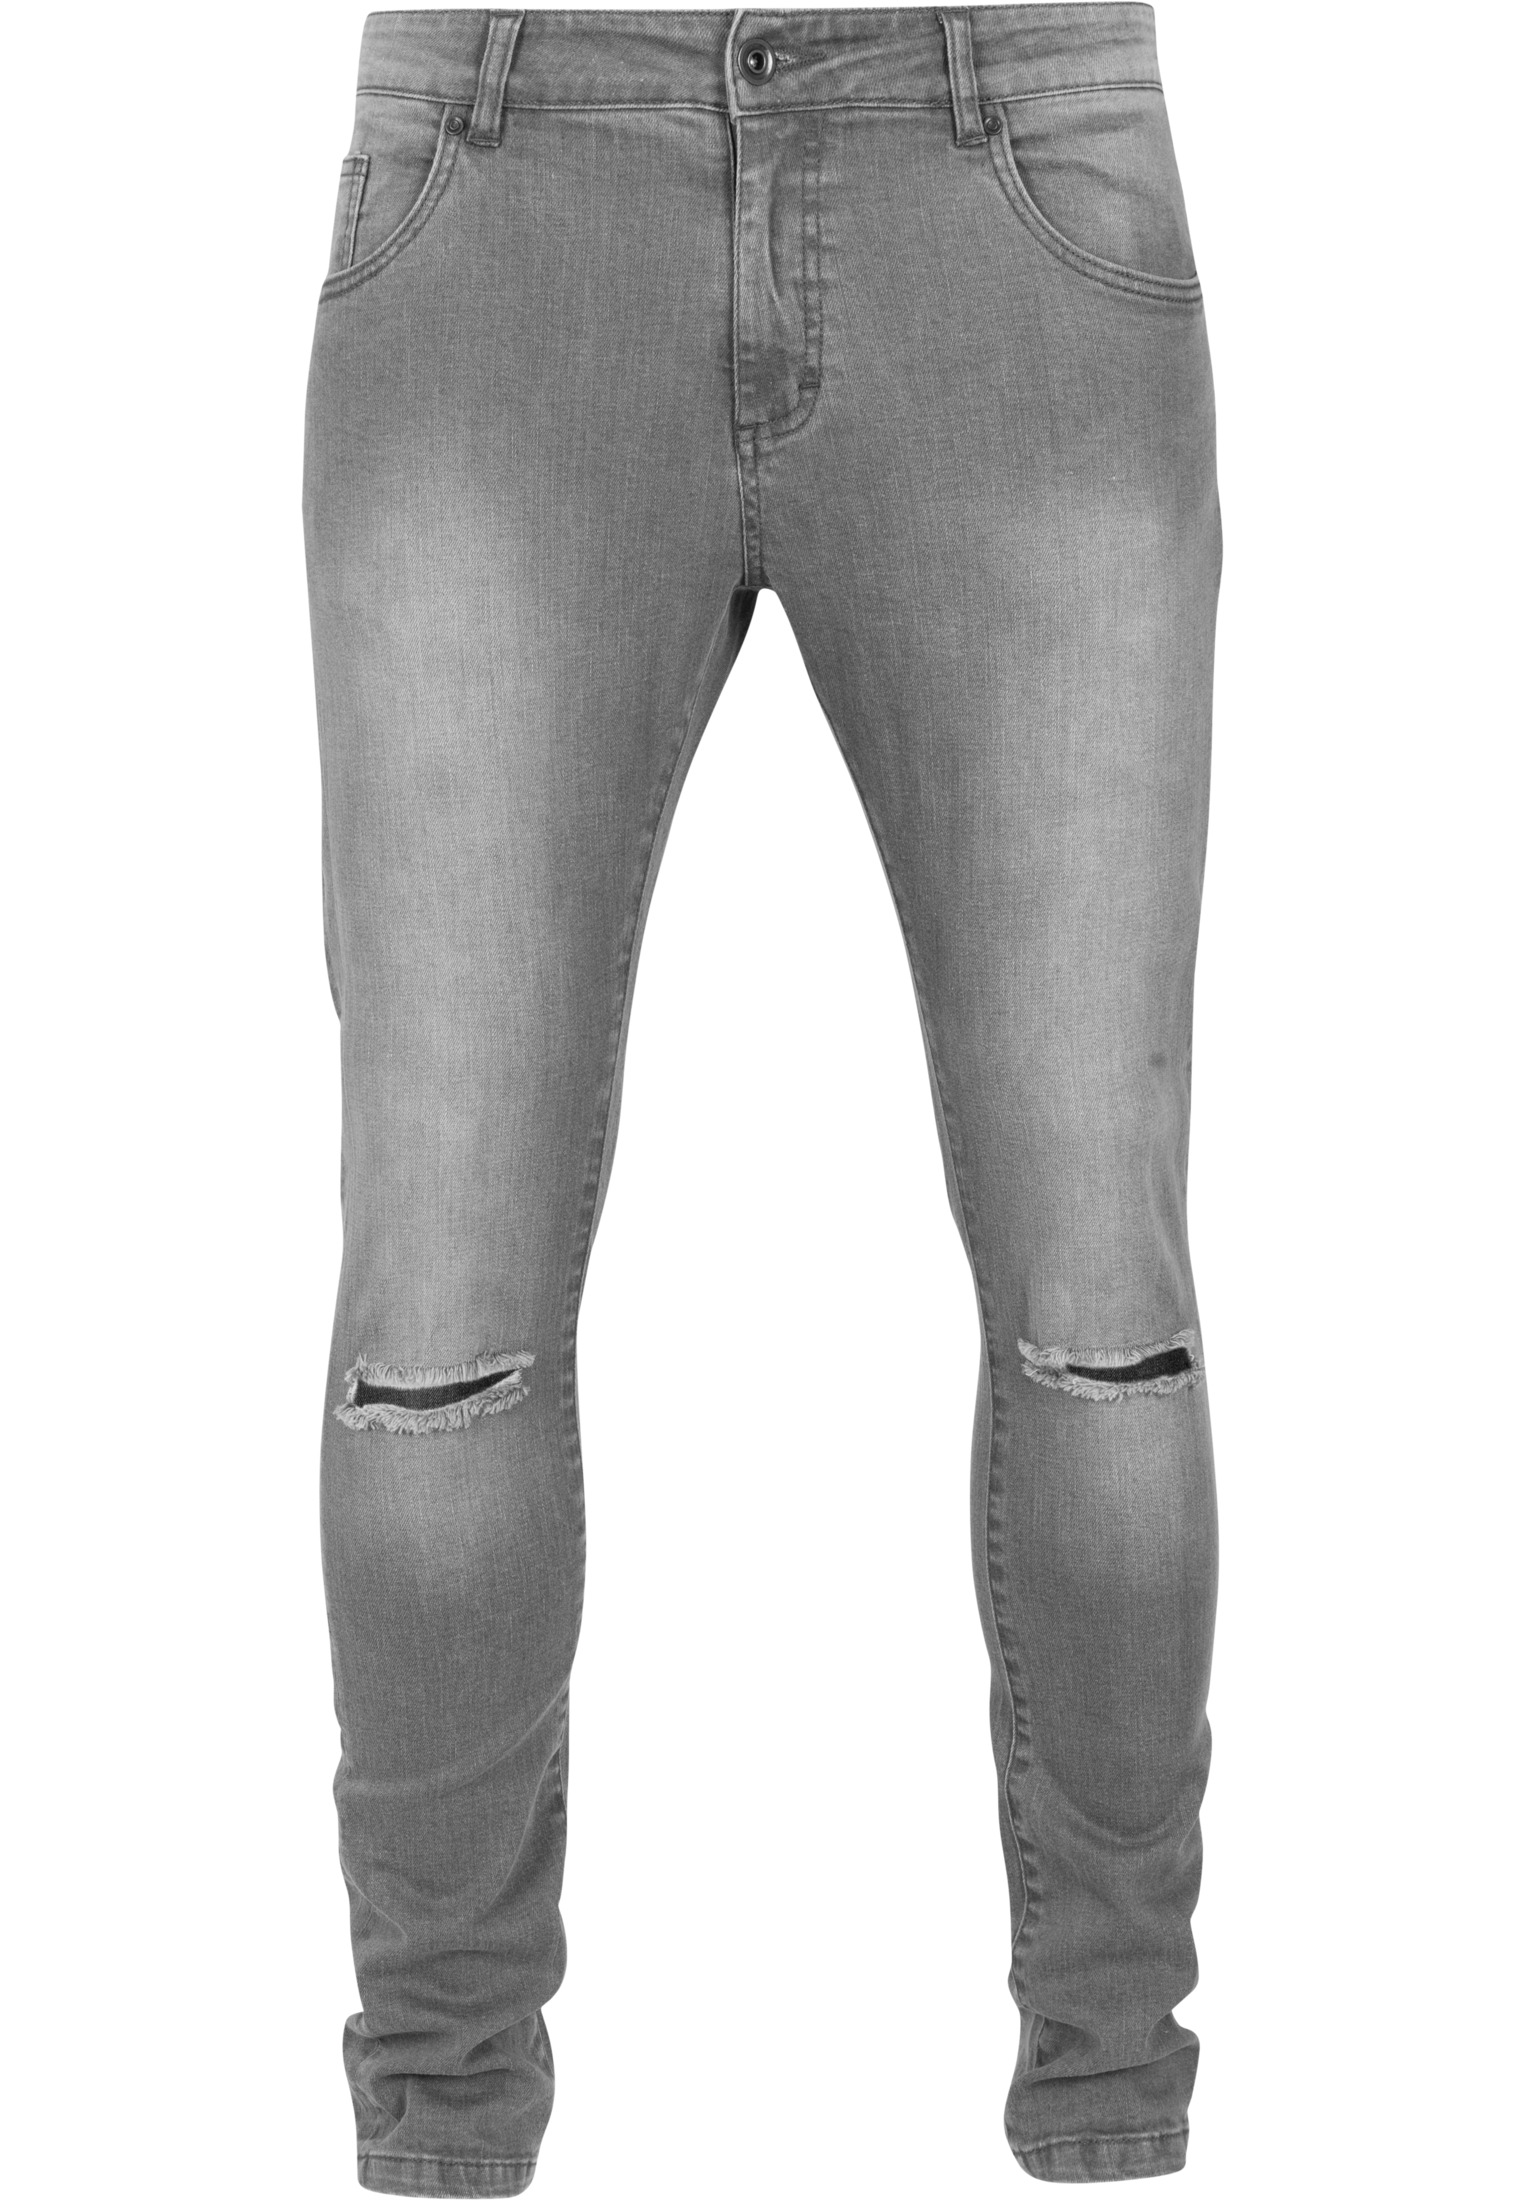 Hosen Slim Fit Knee Cut Denim Pants in Farbe grey